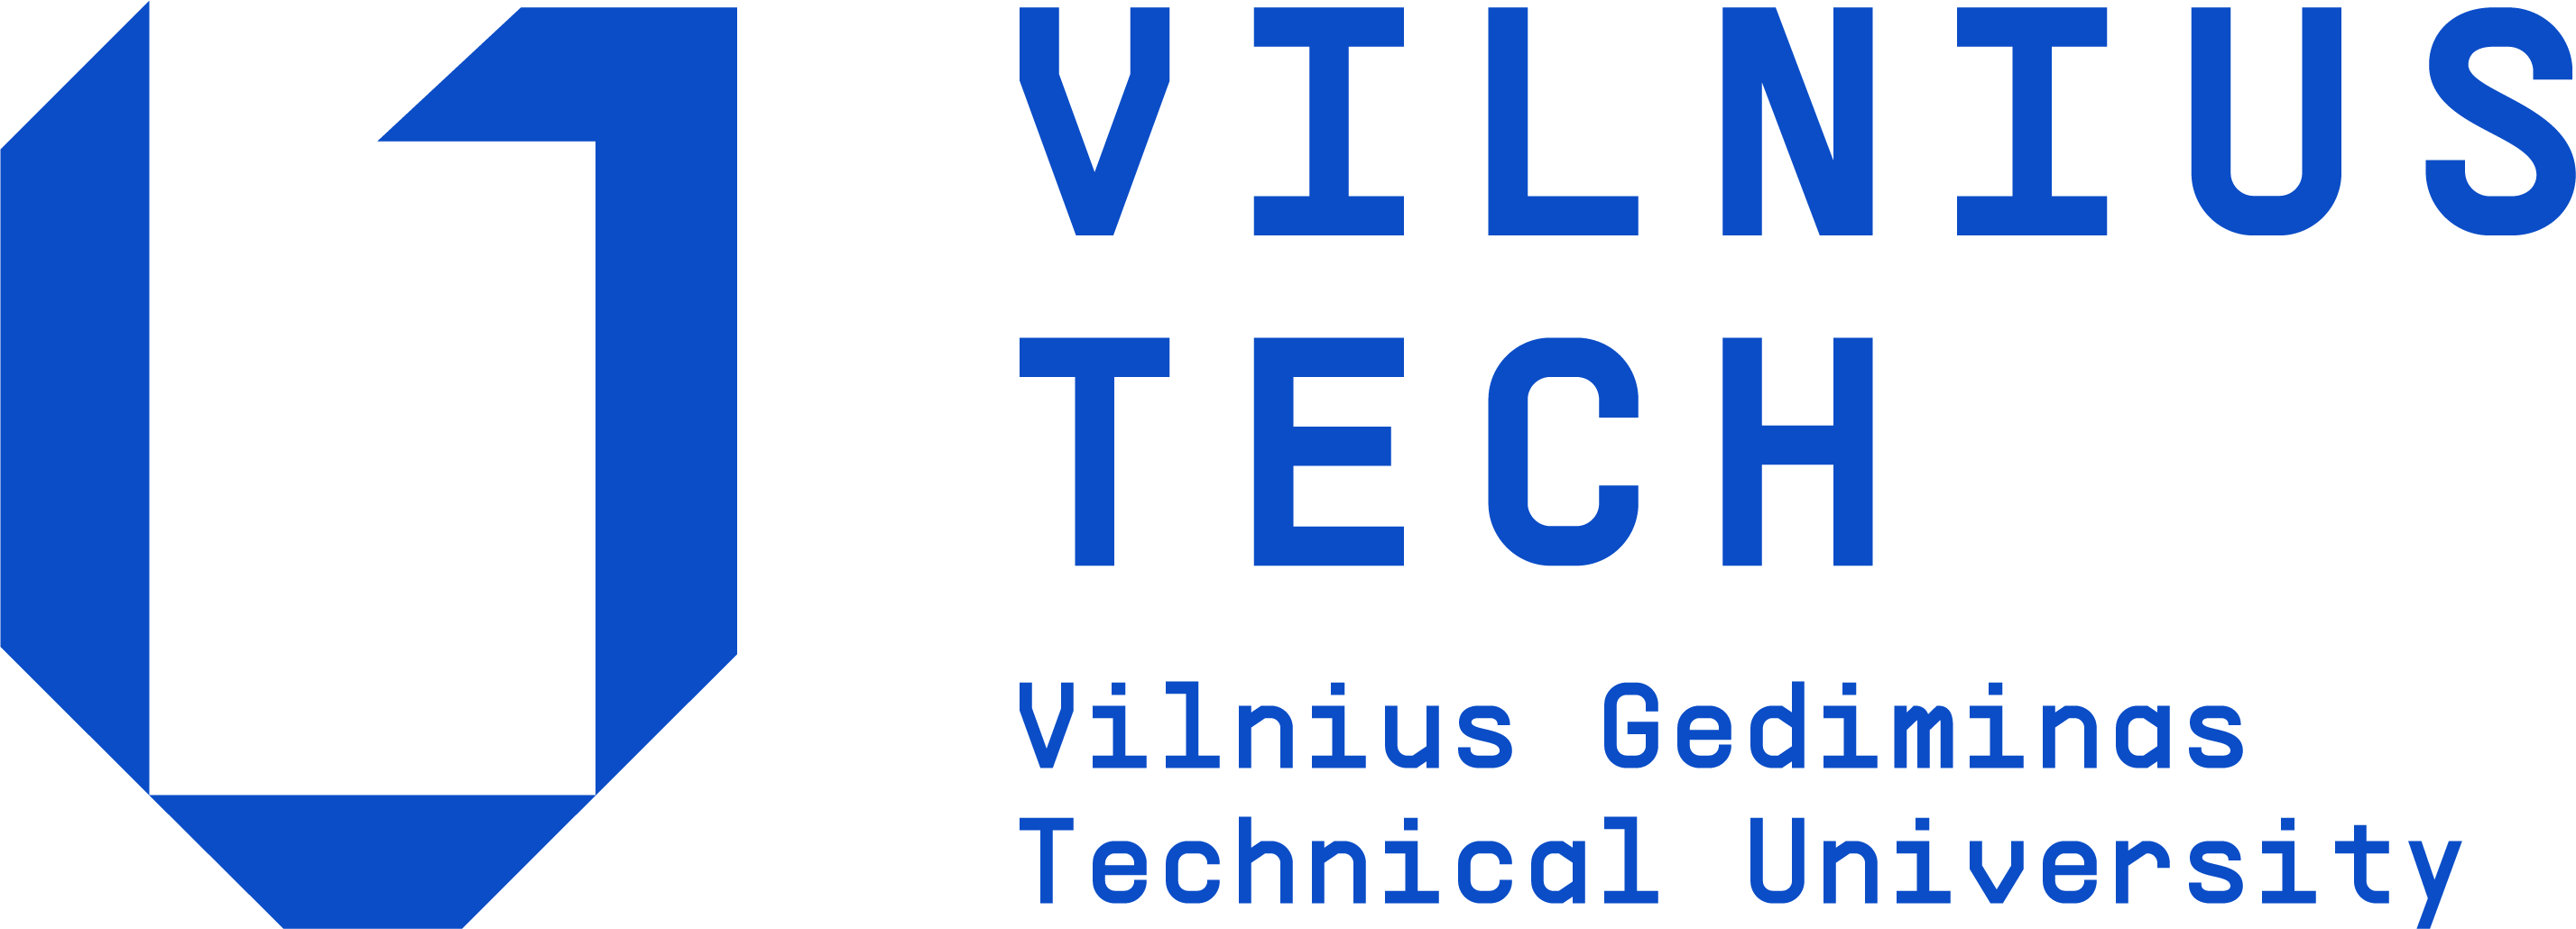 Vilnius Gediminas Technical University logo